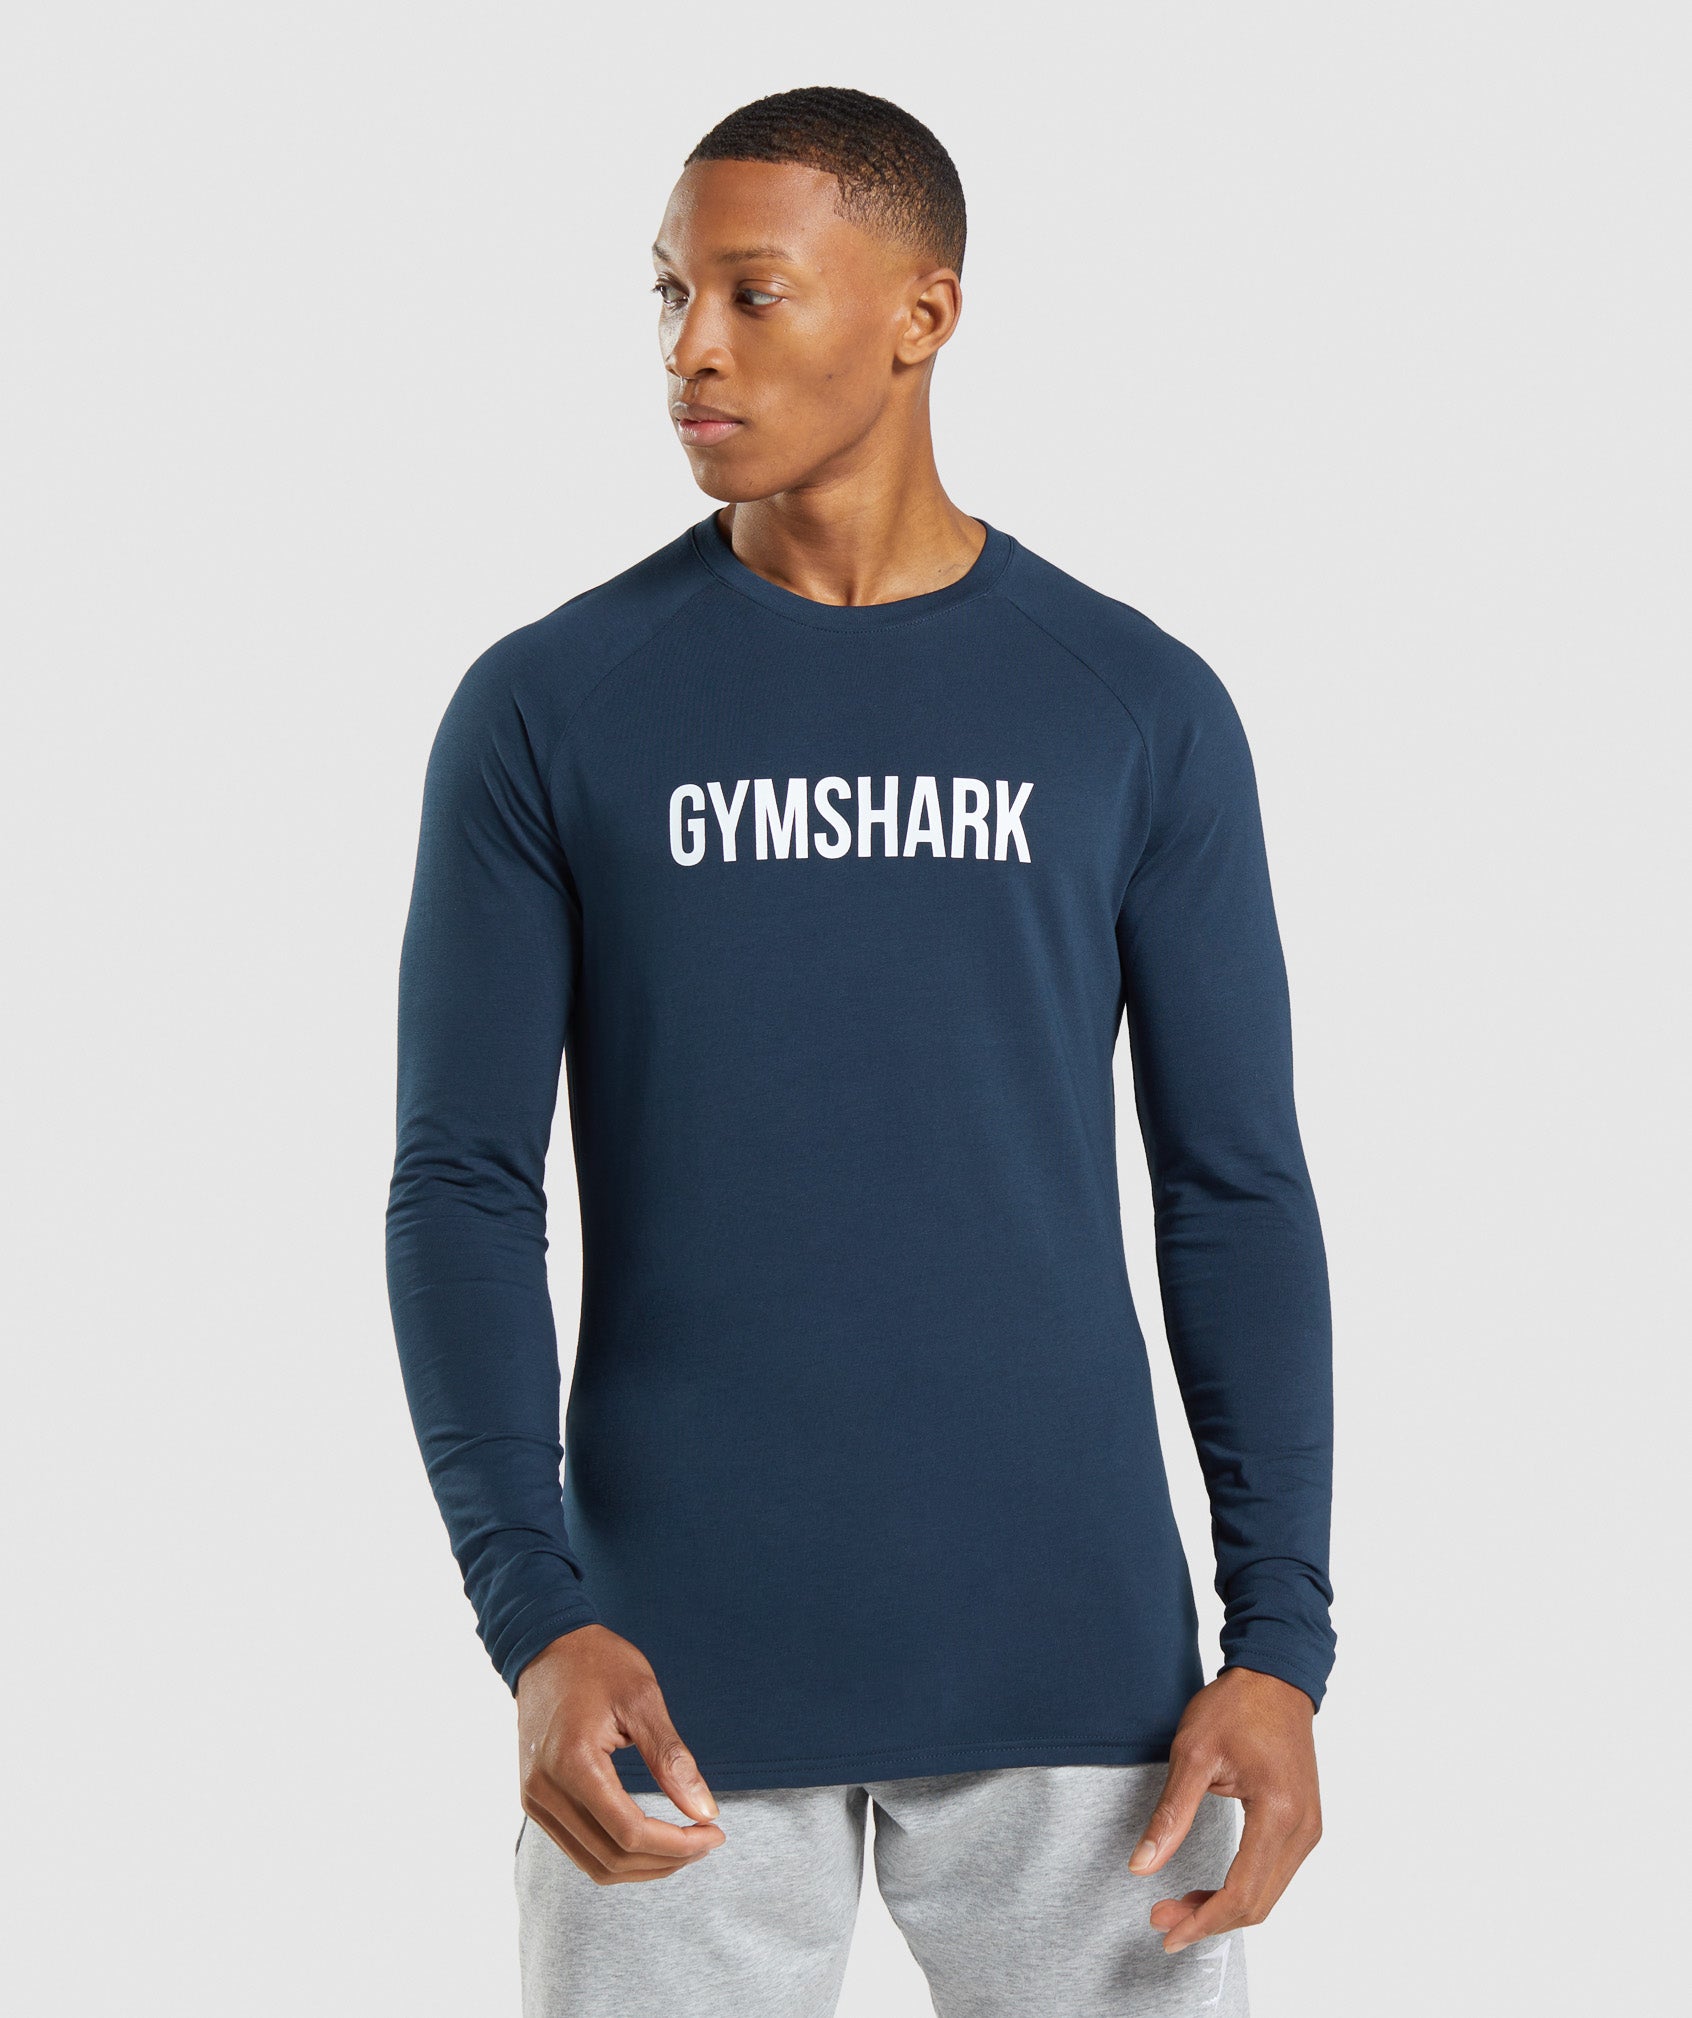 Gymshark Apollo T-Shirt Black Men's Size XL